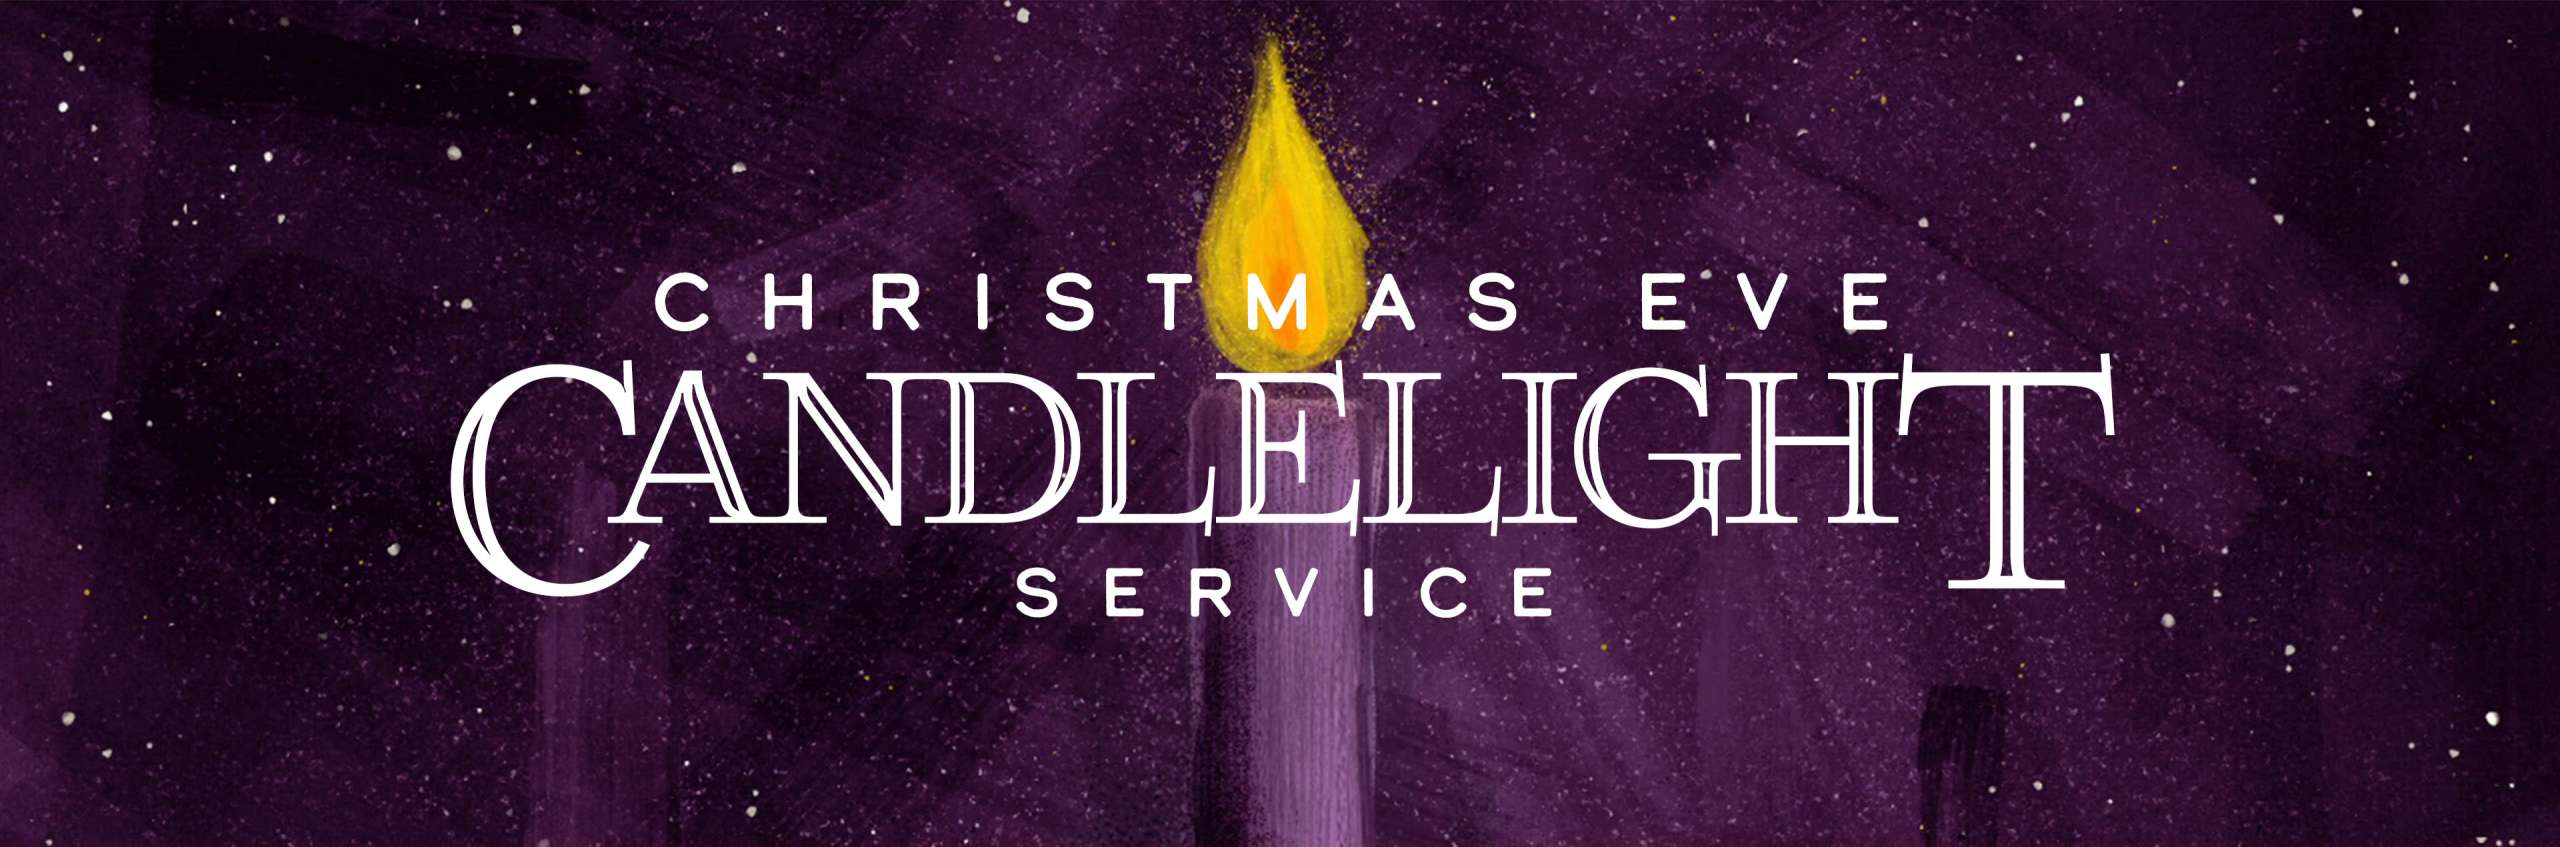 Christmas Eve Candlelight Service // Central Community Church // Wichita, KS